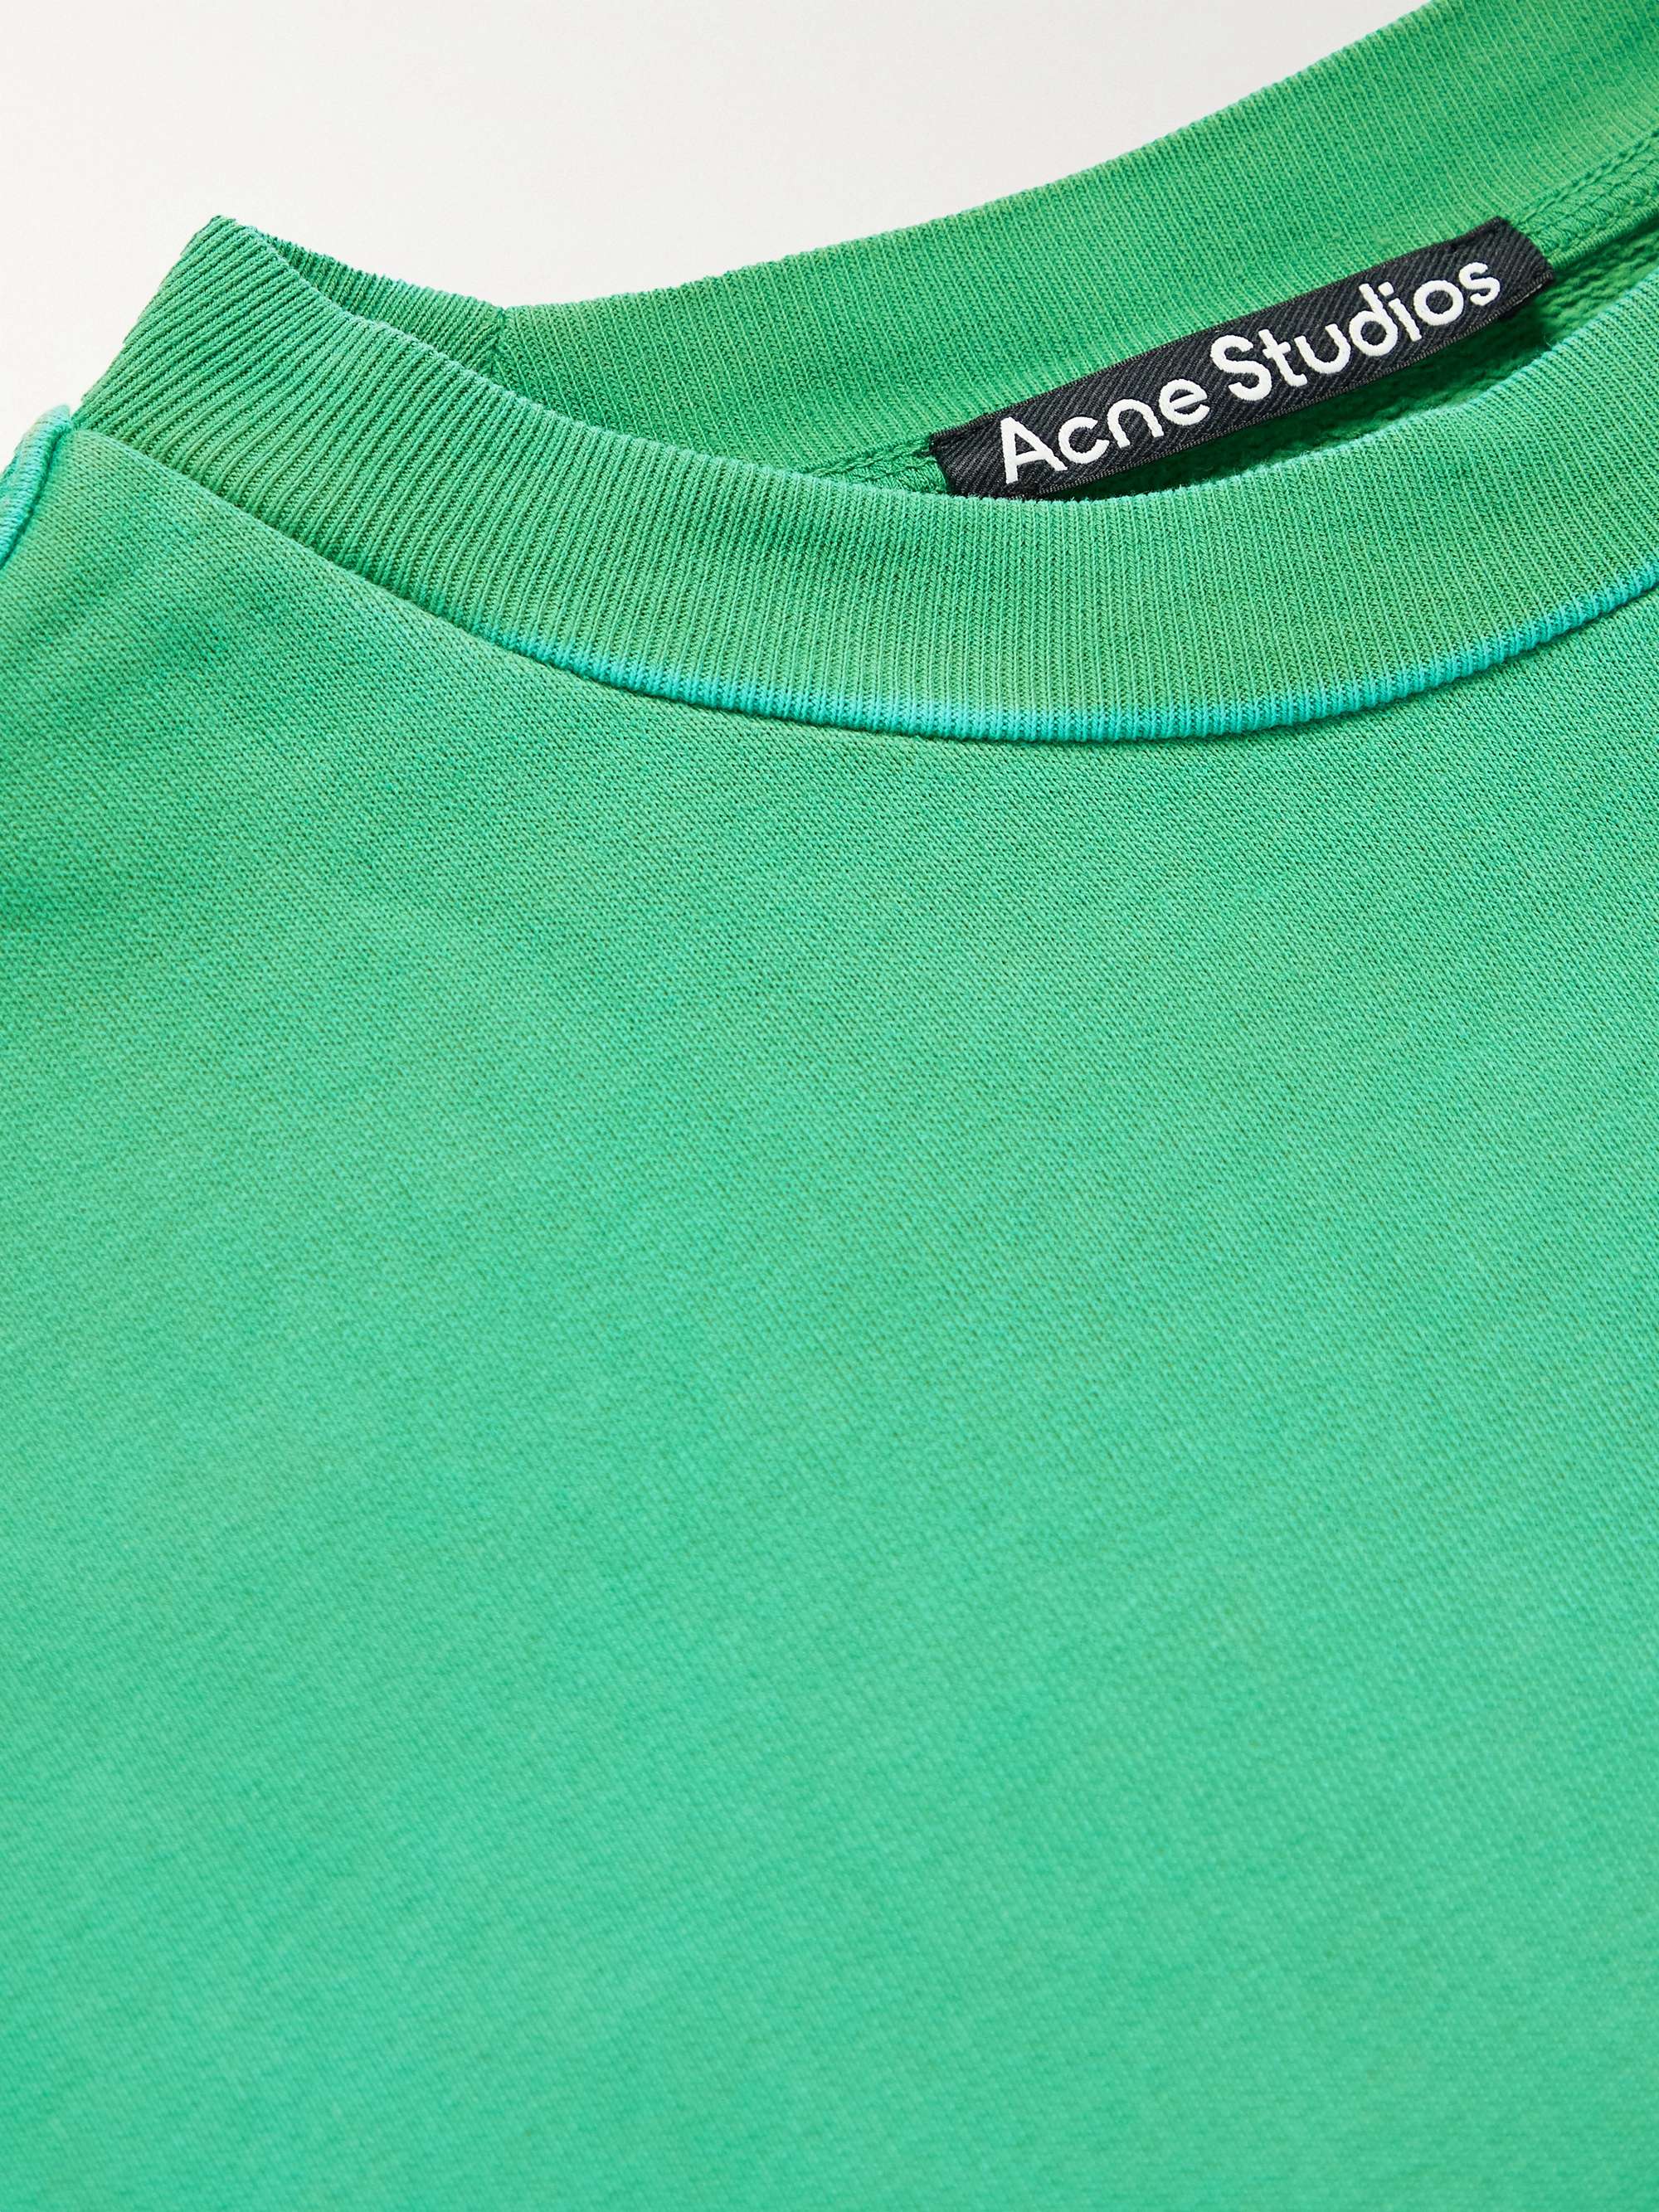 Logo-Appliquéd Garment-Dyed Cotton-Jersey Sweatshirt